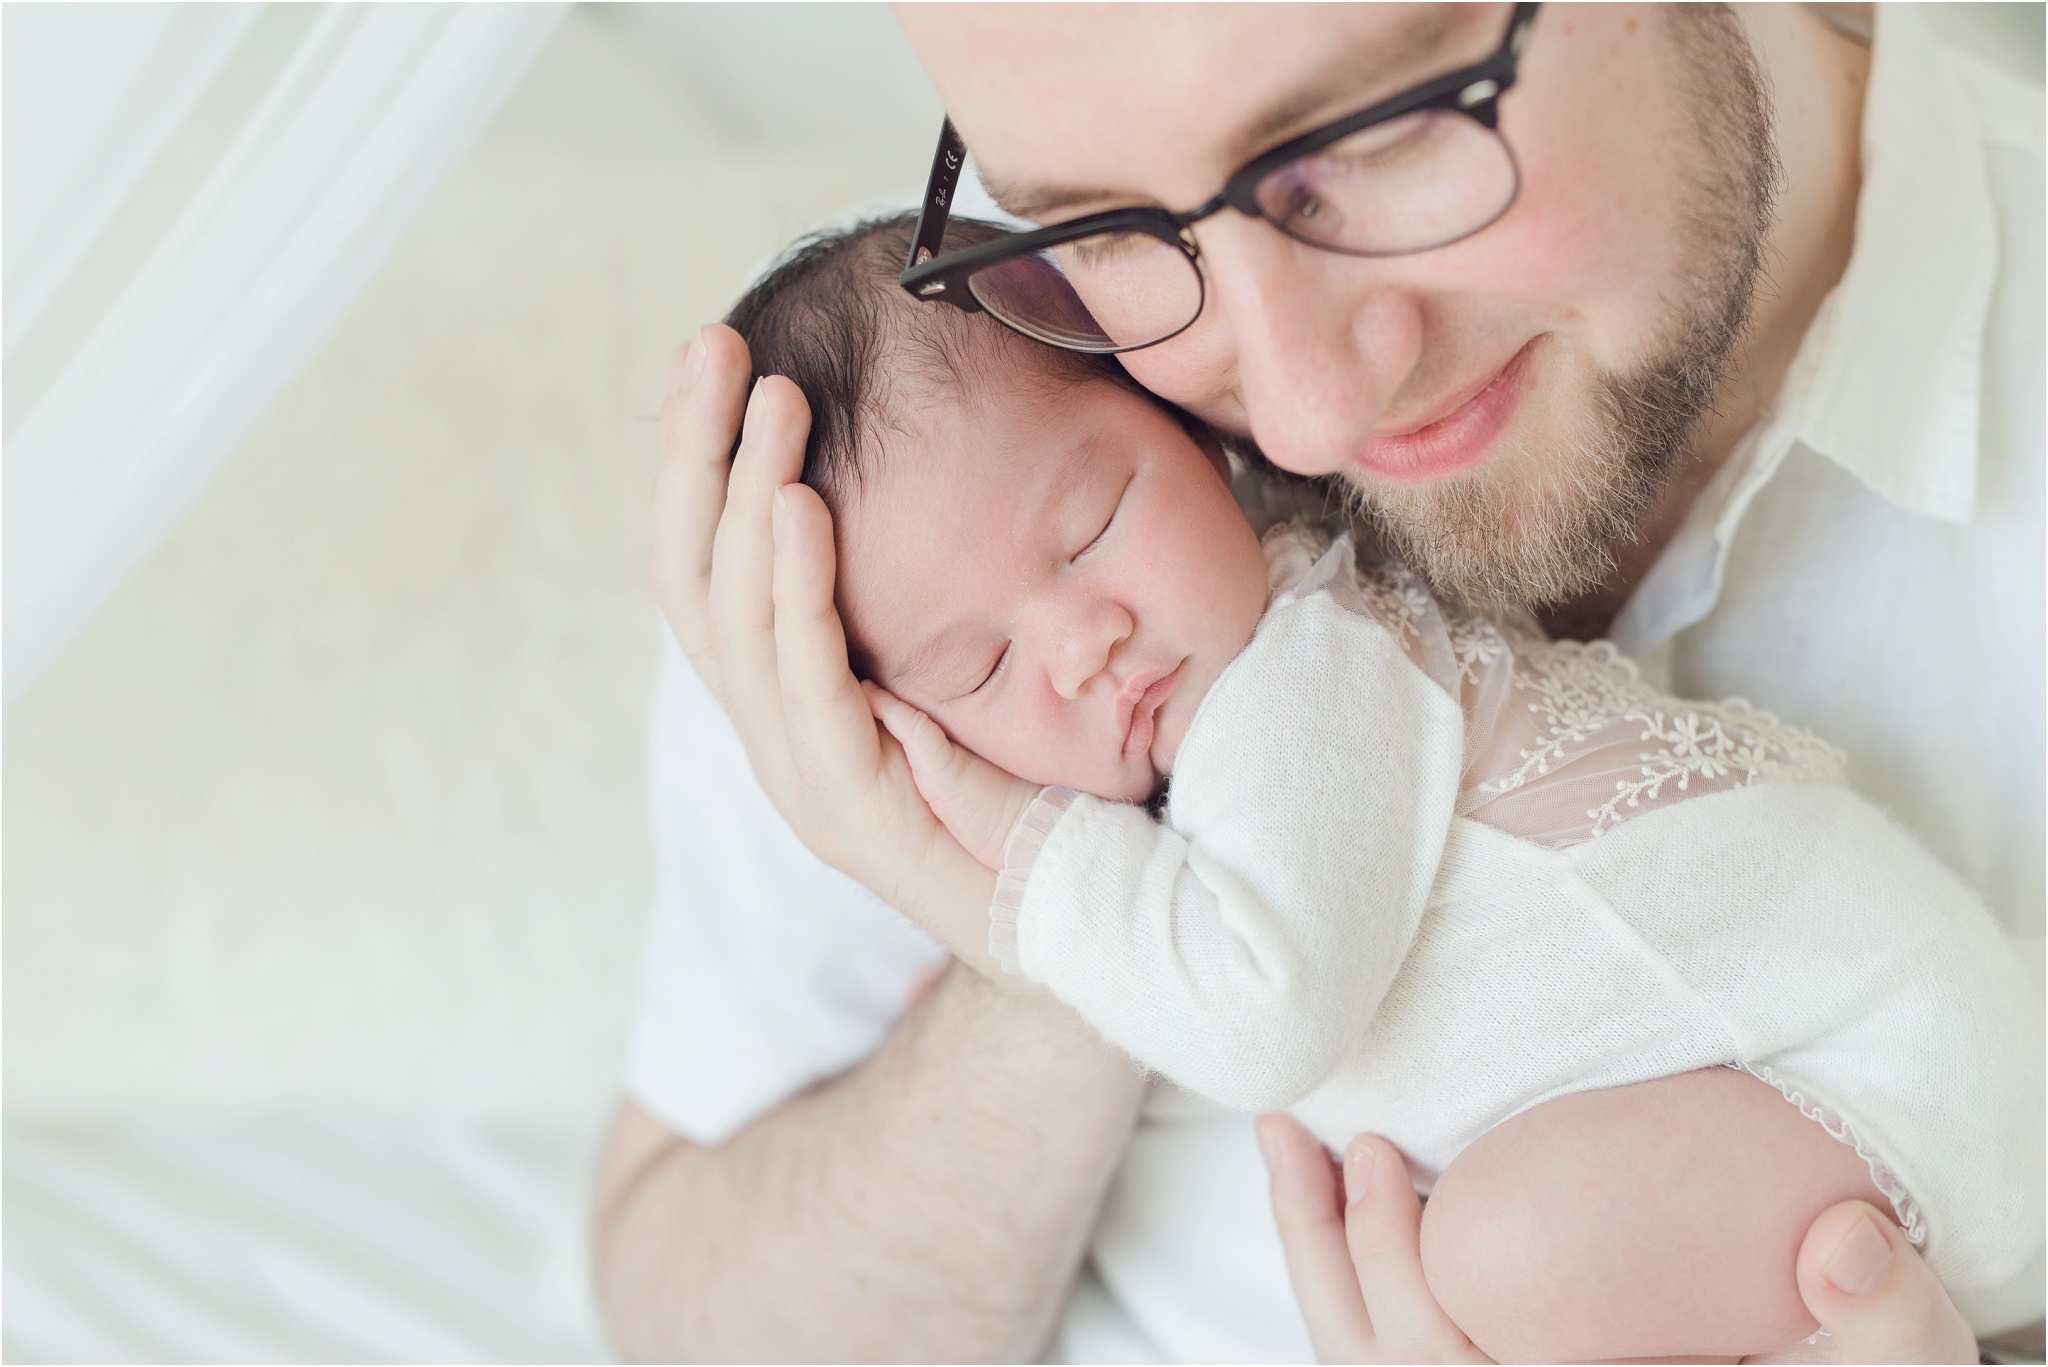 edmonton newborn photographer, nc photography, newborn photos, st albert newborn photographer